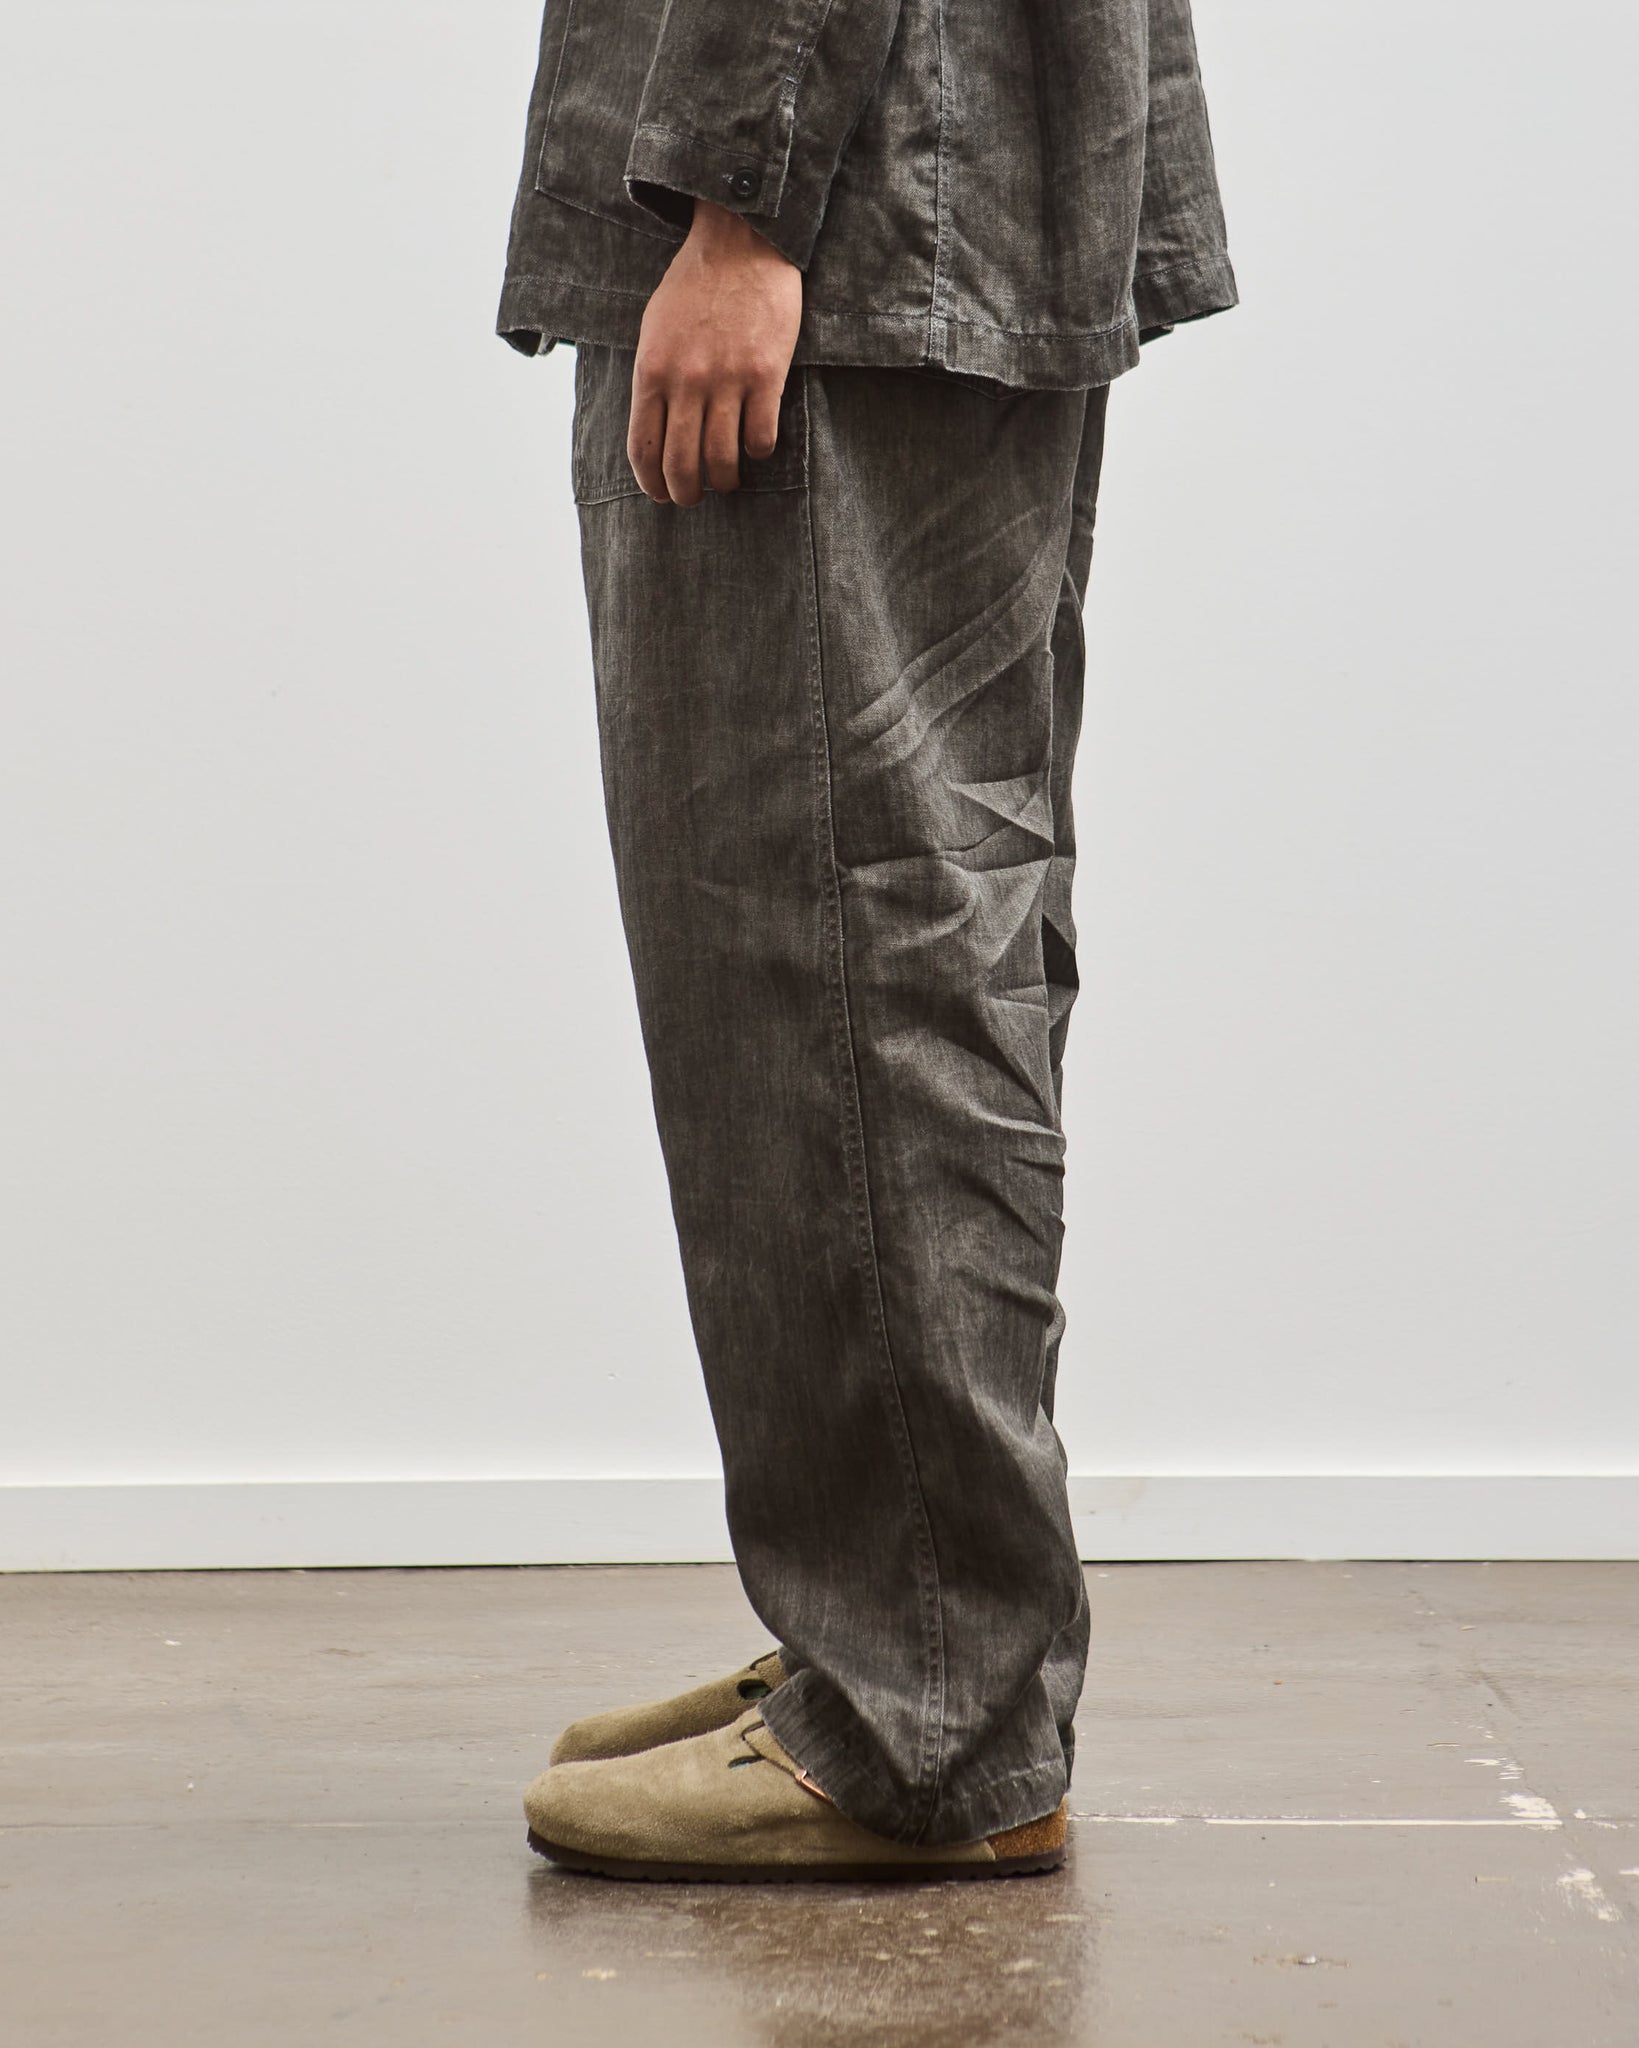 orSlow Summer Fatigue Pants, Charcoal Gray